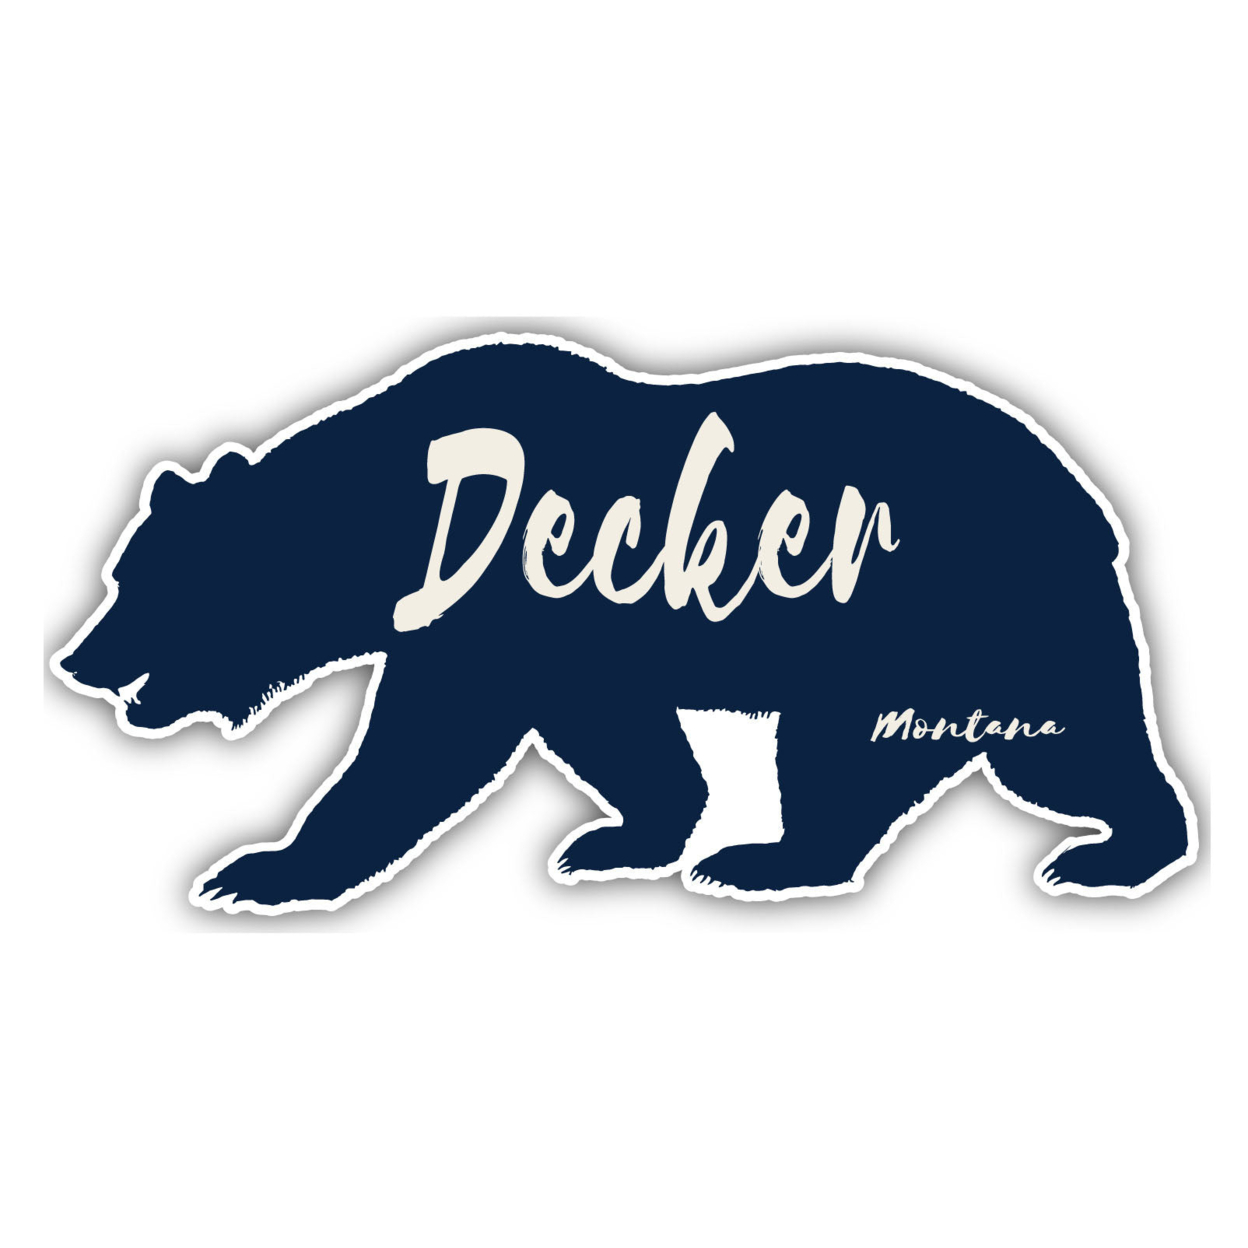 Decker Montana Souvenir Decorative Stickers (Choose Theme And Size) - 4-Pack, 4-Inch, Bear